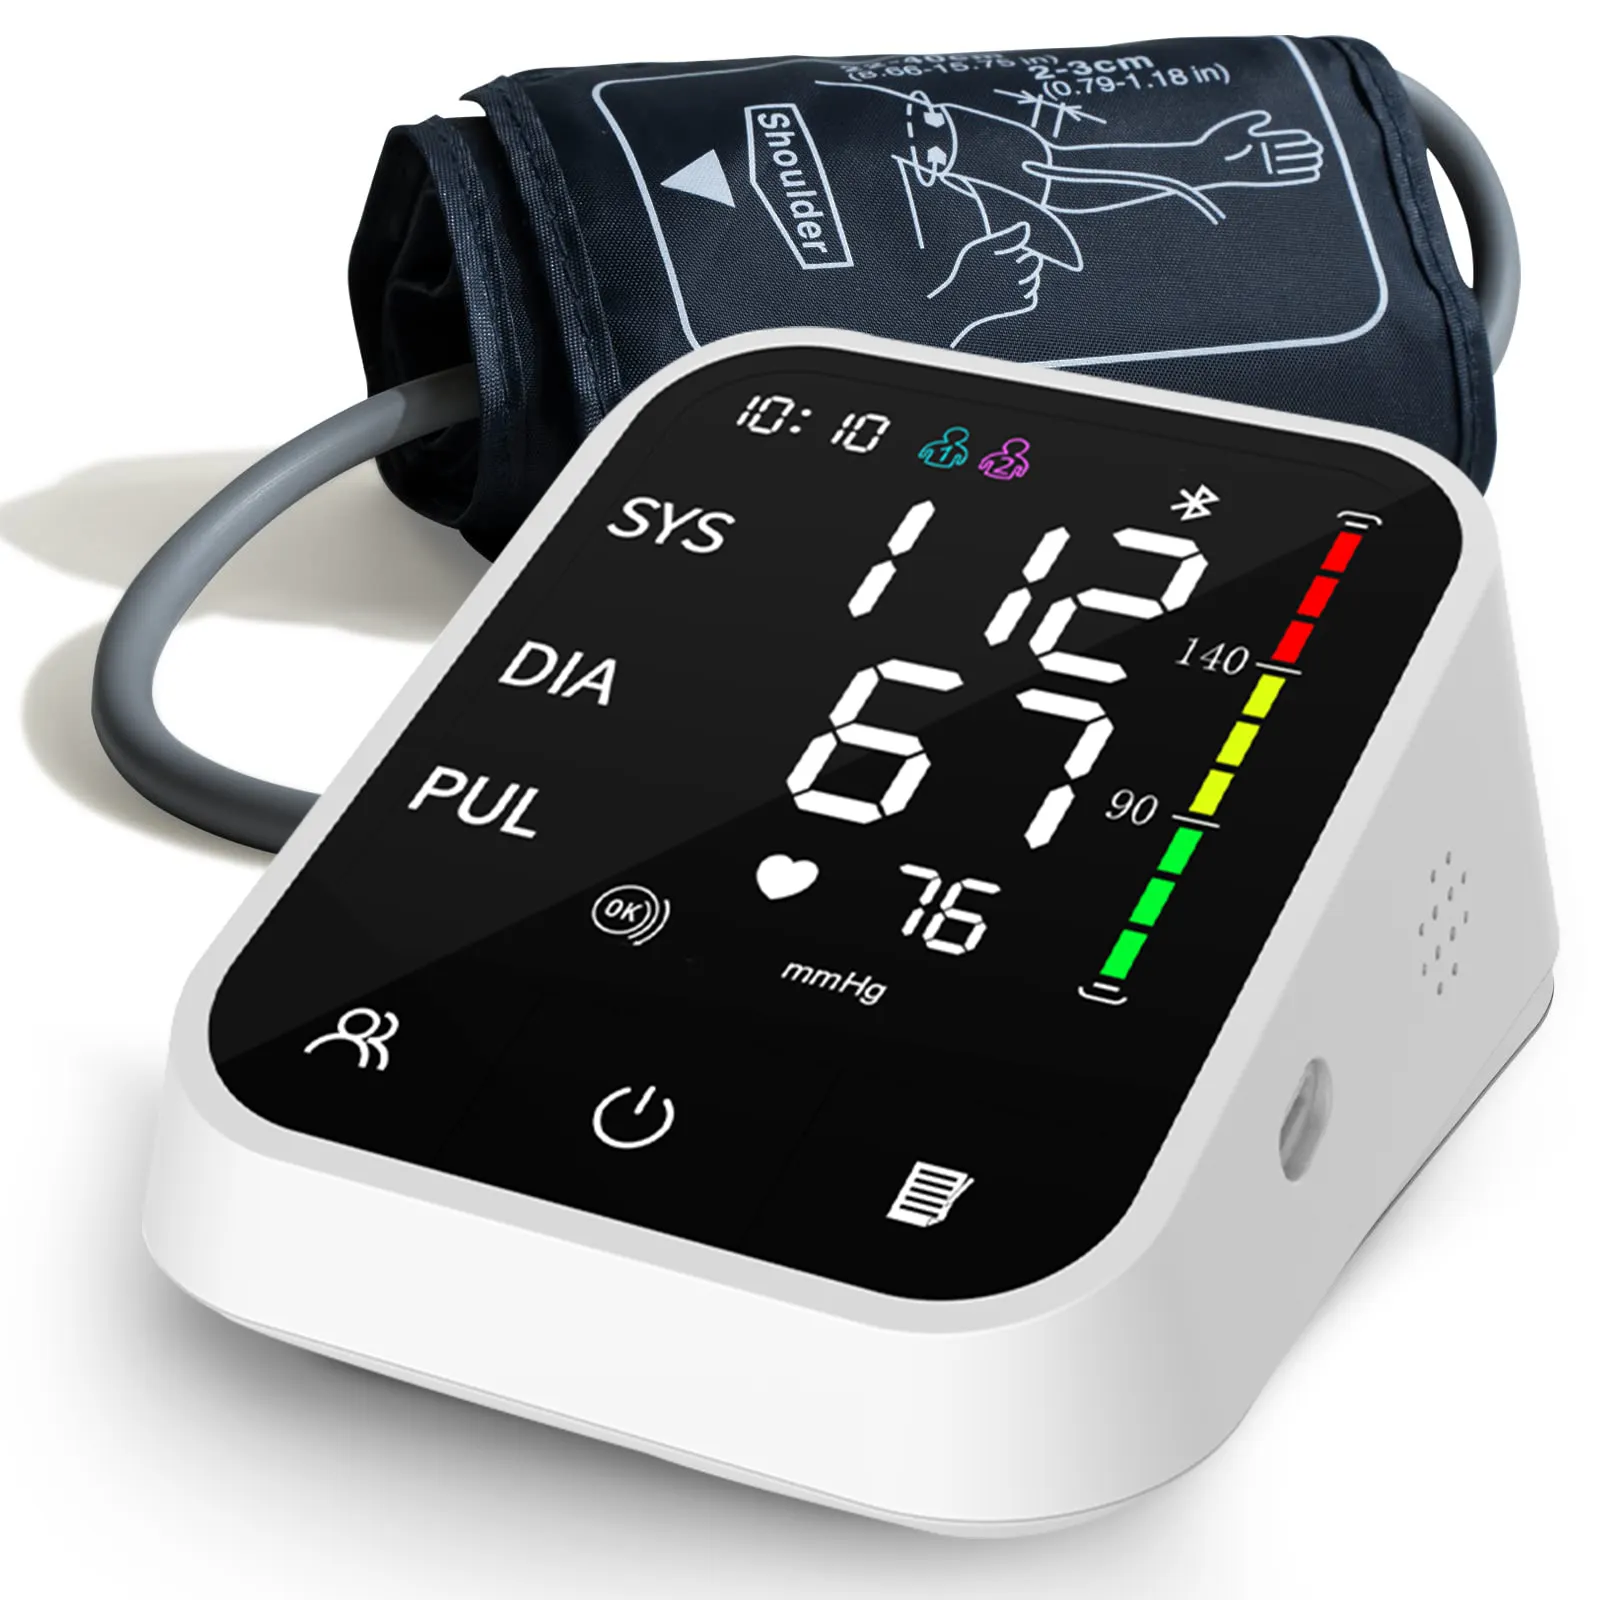 Wireless Voice Tragbares Oberarm-Blutdruck messgerät Tensio metro Digital BP Monitor Bluetooth-Blutdruck messgerät